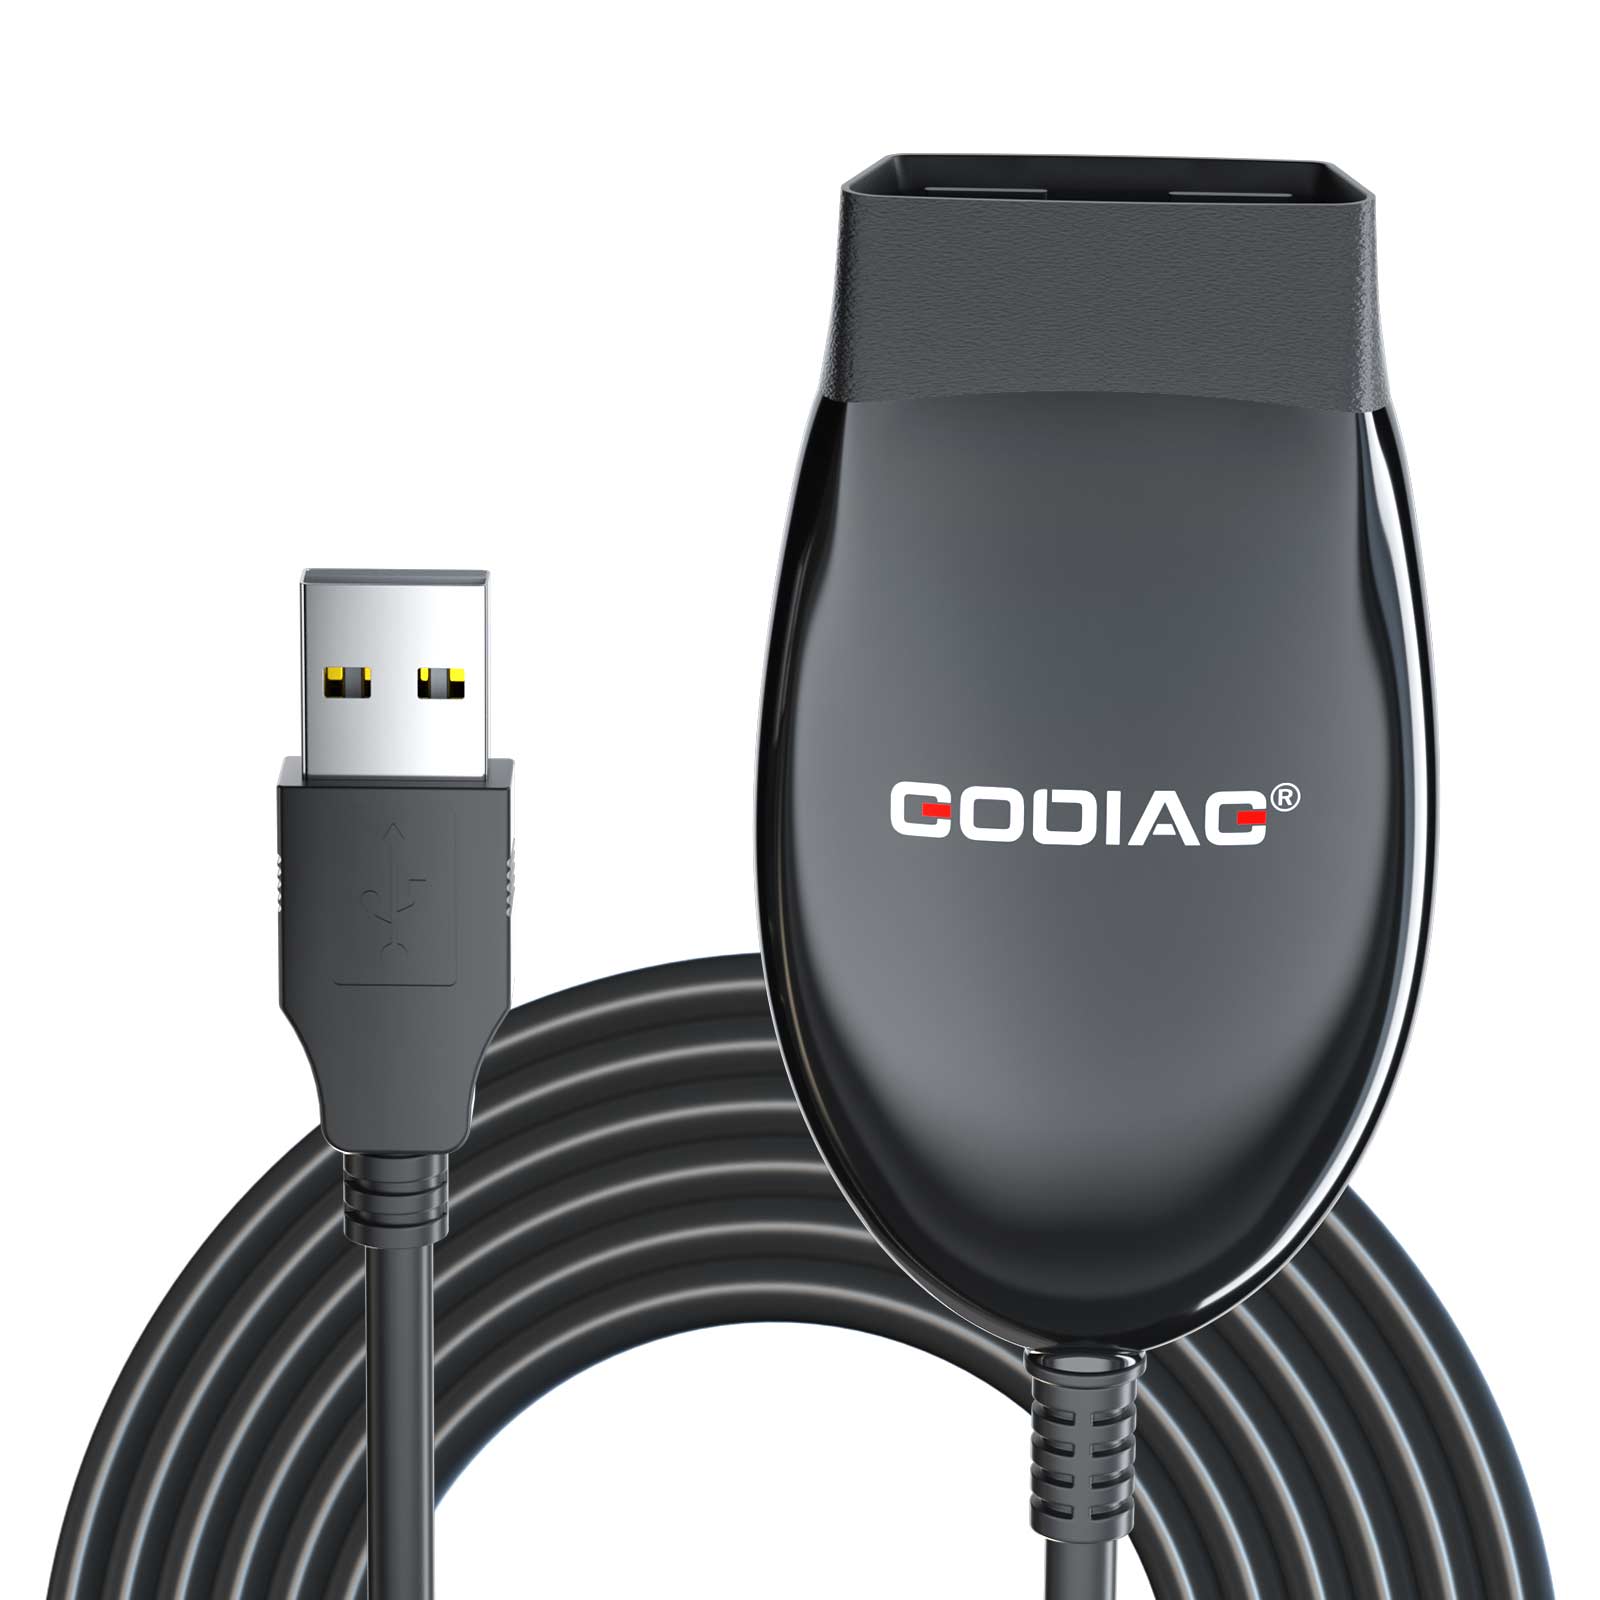 Godiag gd101 j2534 soporte de cable de diagnóstico j2534 y elm327 diagnóstico para vehículos compatibles j1979 de Toyota / honda Acura / Odis / Ford Mazda